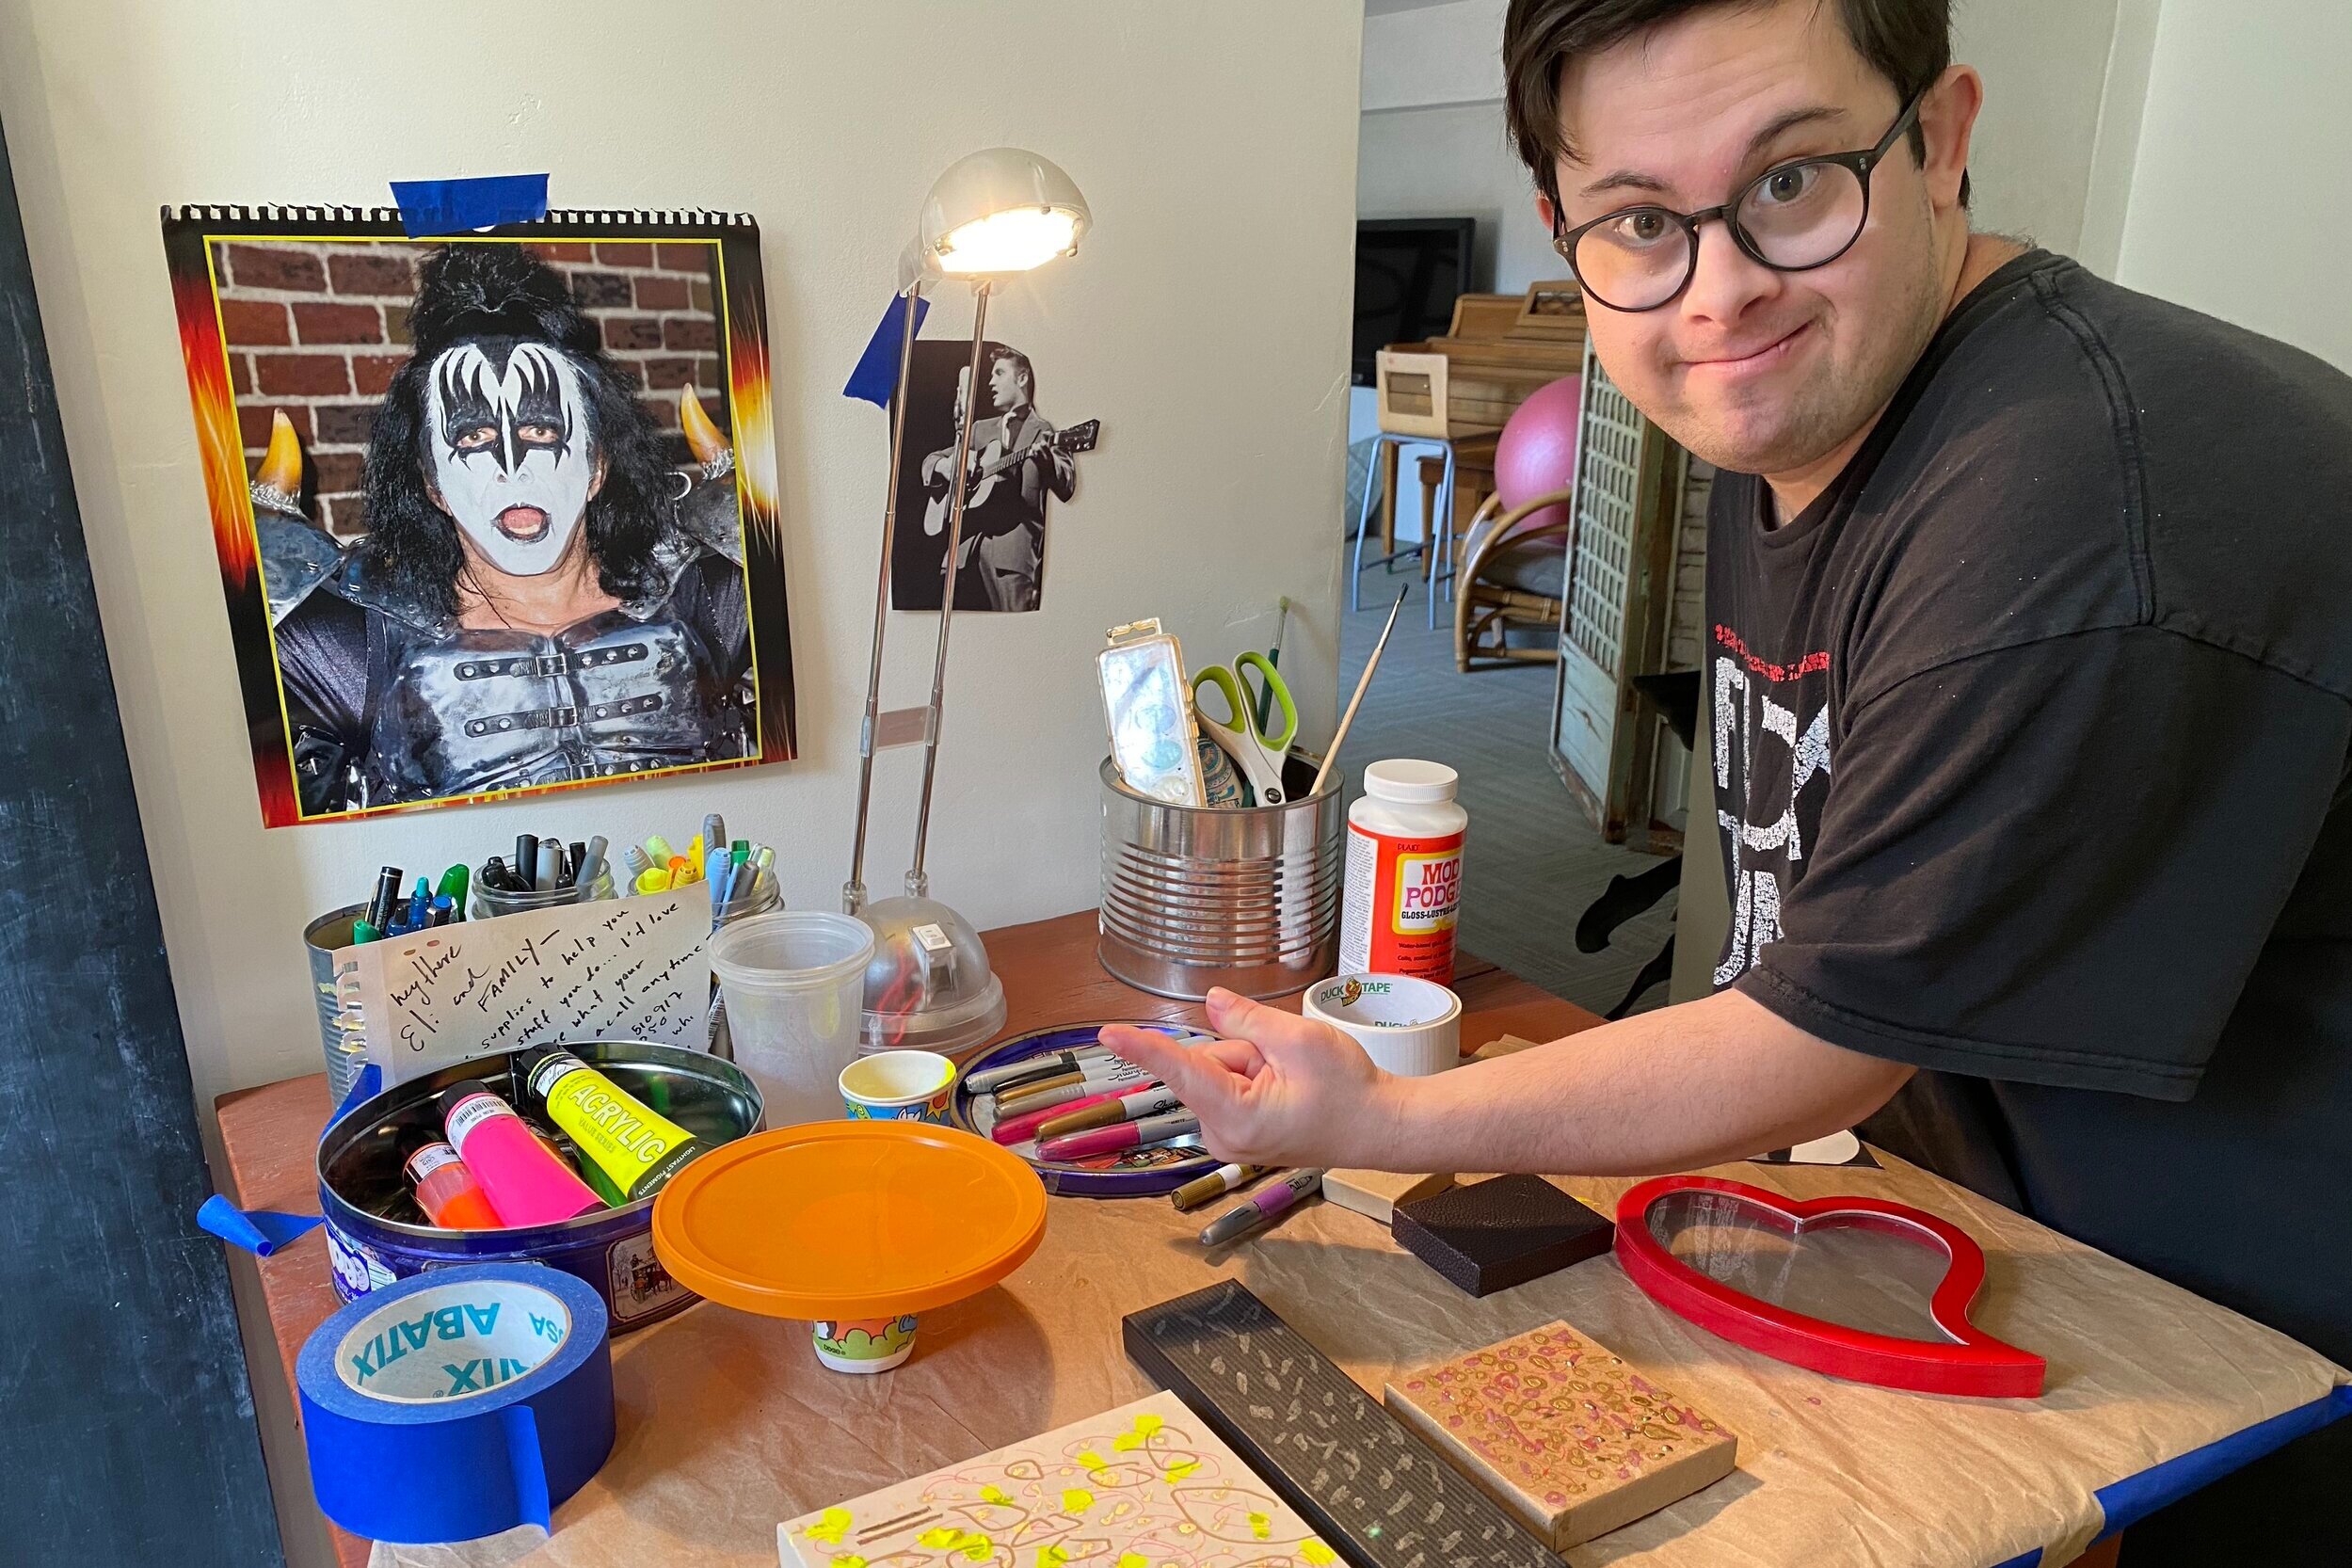 Artist Eli Cooper sharing his workspace setup at home